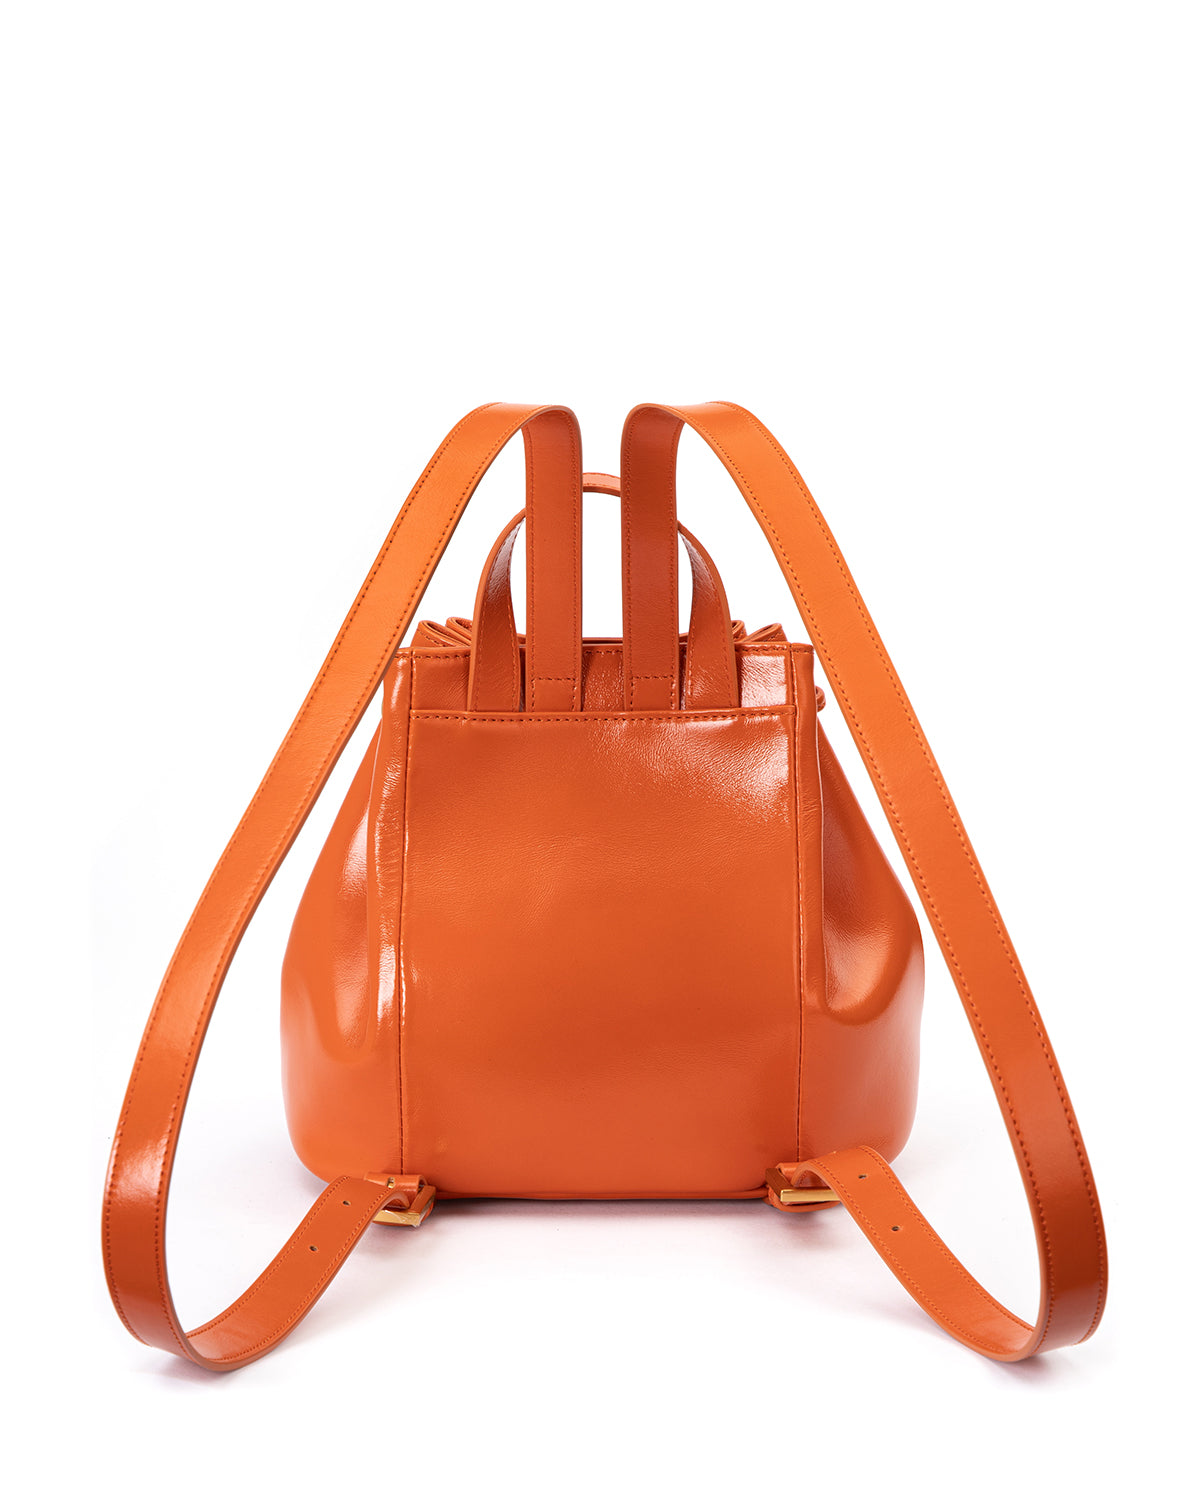 Brandon Blackwood New York - Midori Bag - Orange Oil Leather